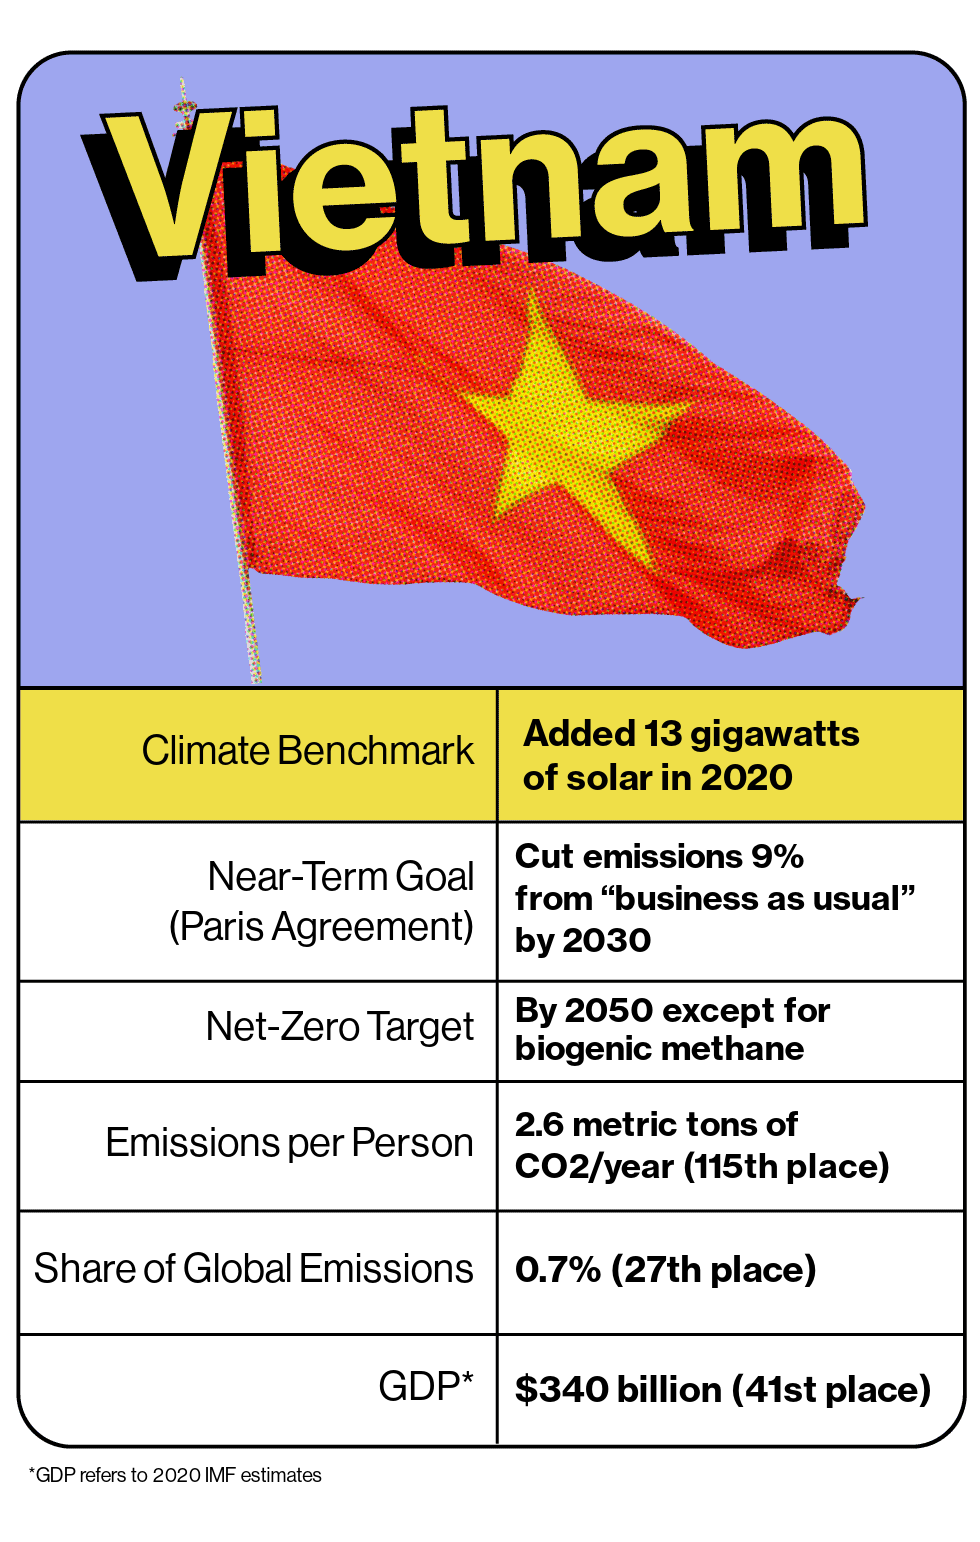 Vietnam's Climate Benchmark Scorecard